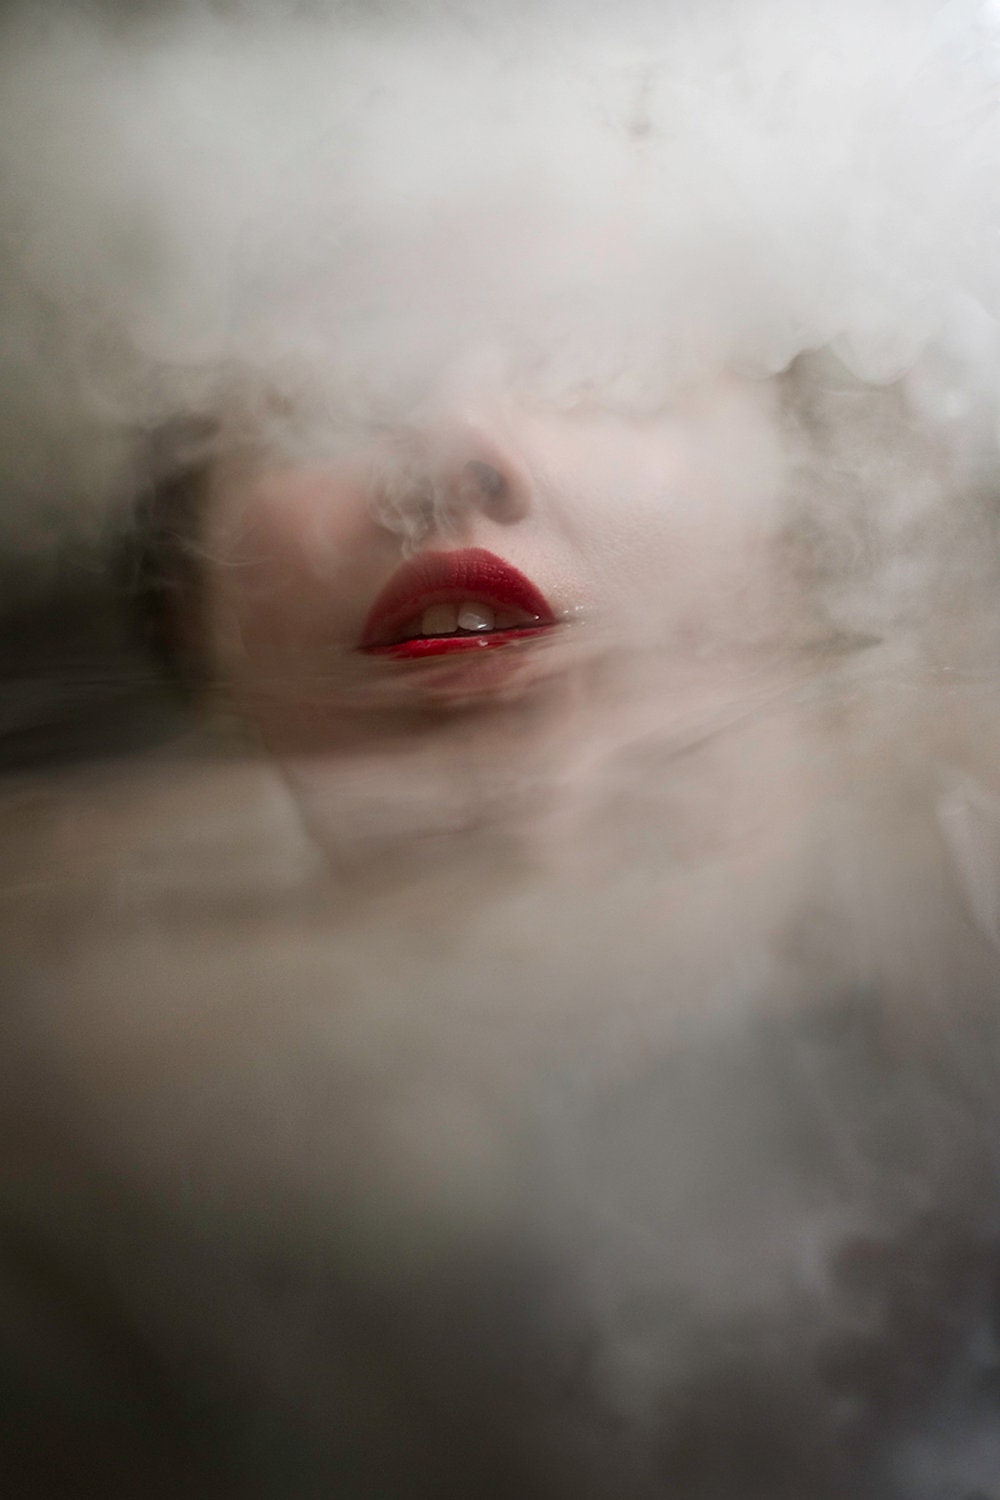 16" x 11" - Conceptual Digital Photography - Fog - Dream - Woman - Light - Water - Mysterious - Psychological - Fine Art - Print - MichelleFader